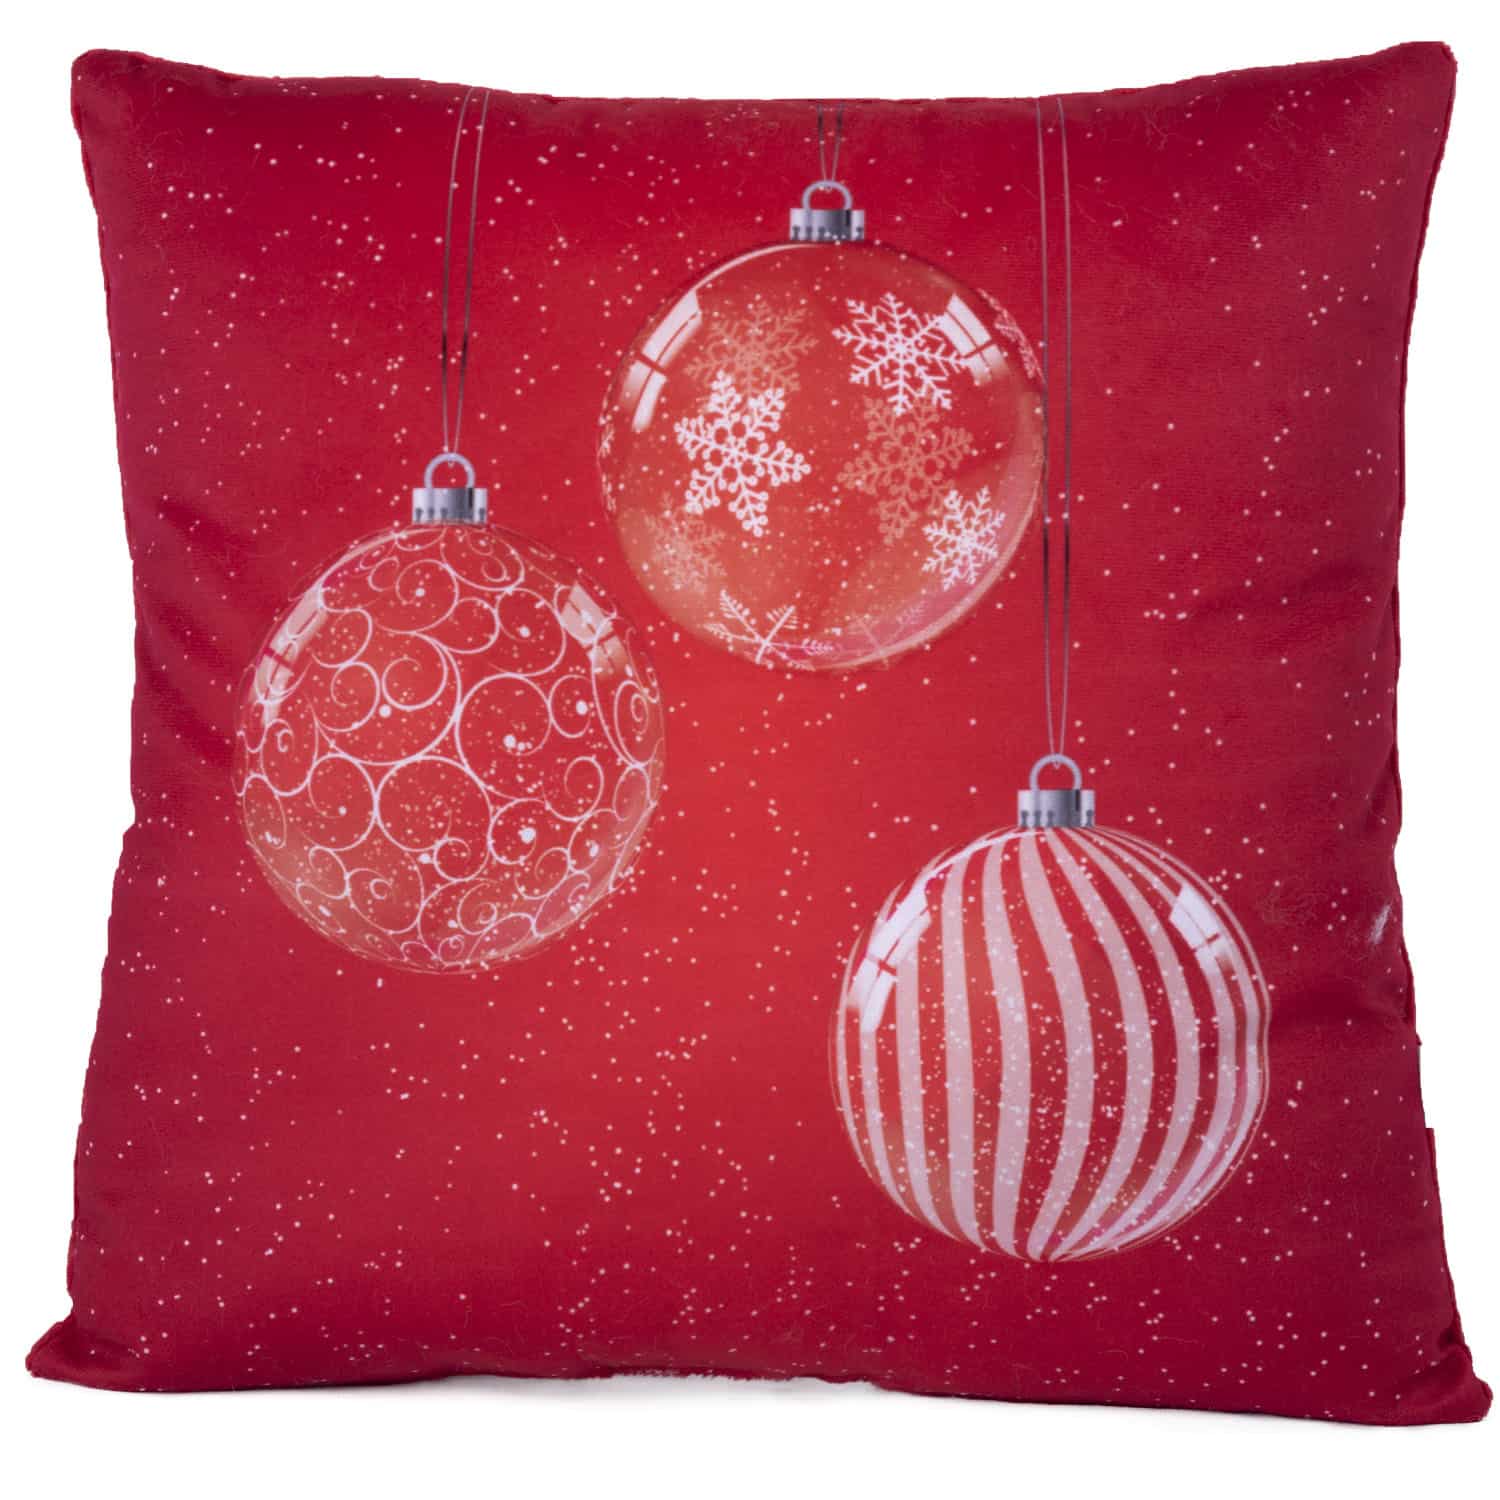 Pillow with Christmas balls